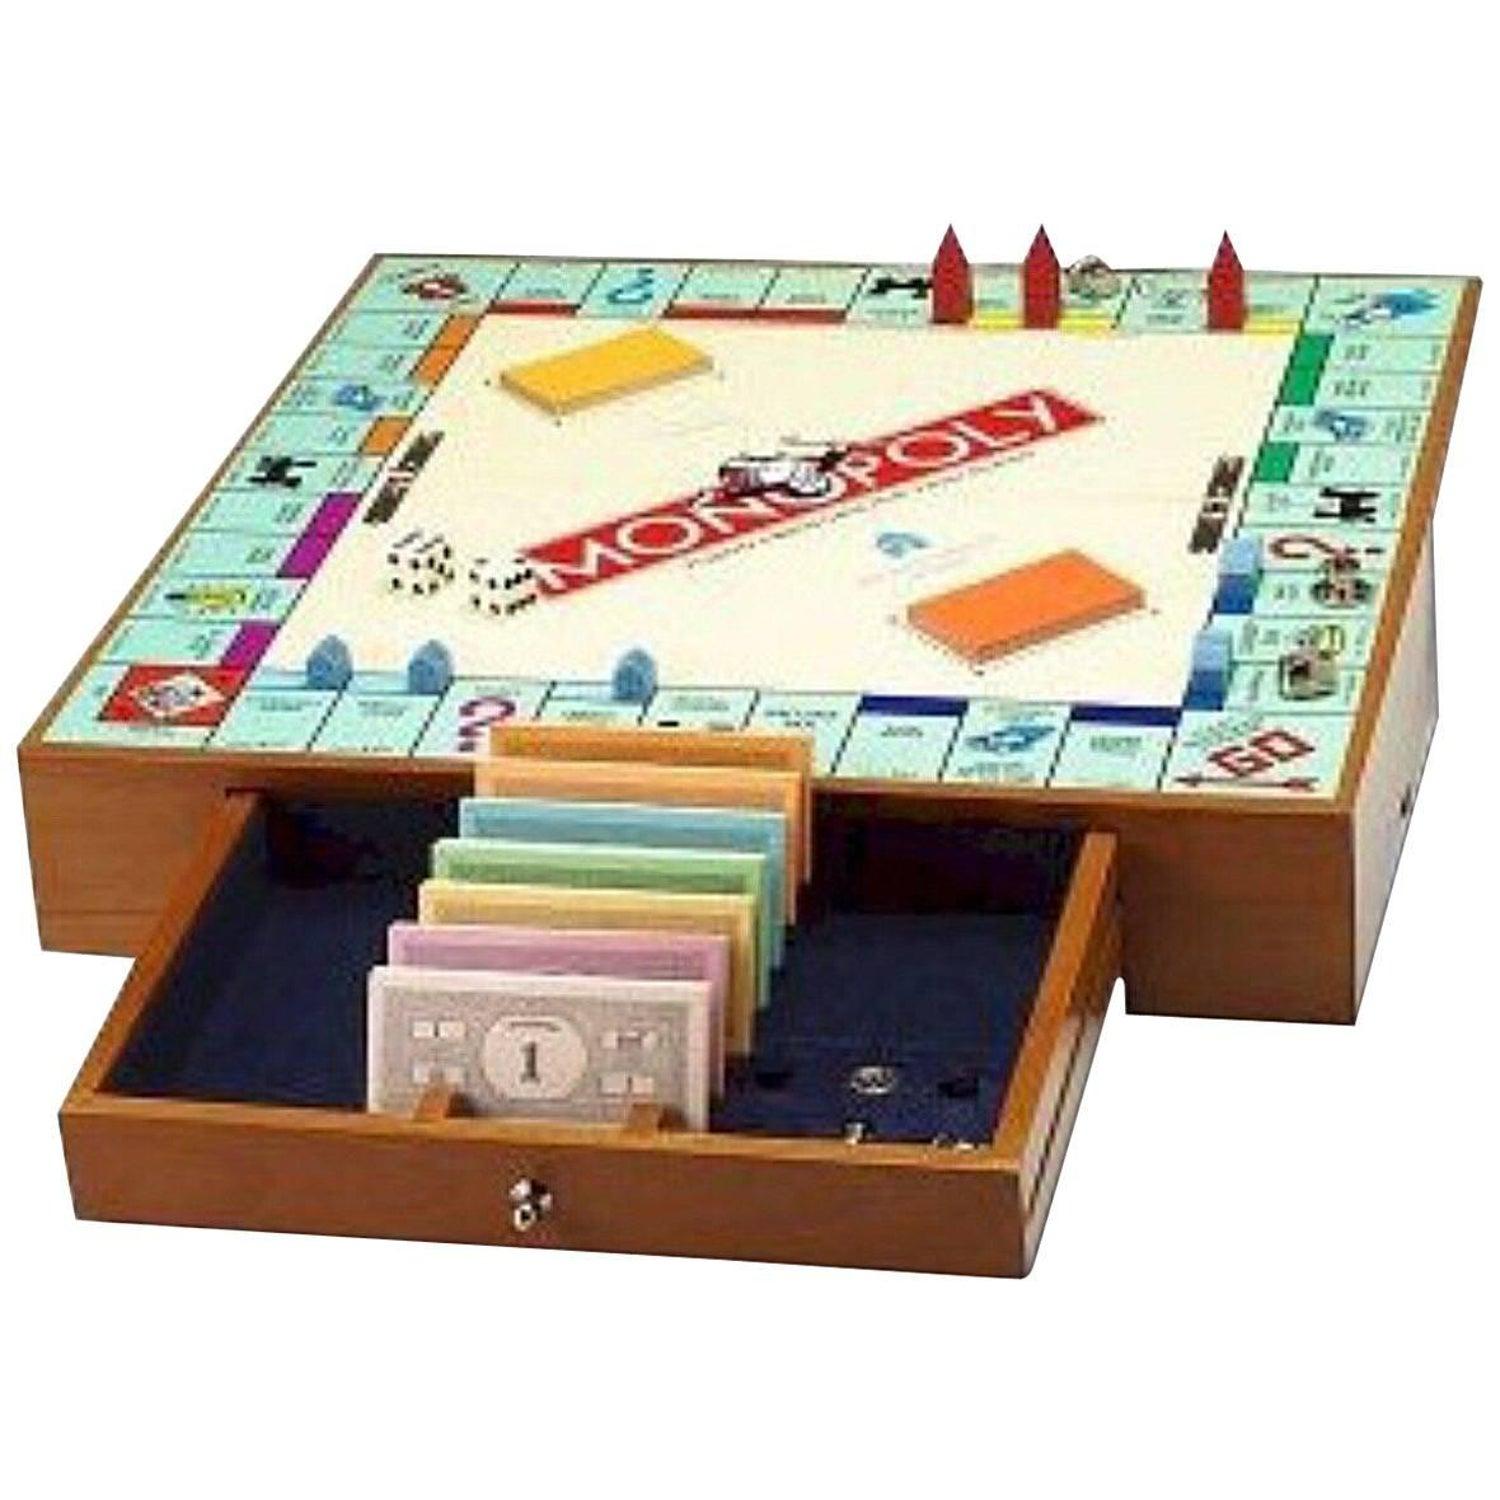 monopoly wooden box